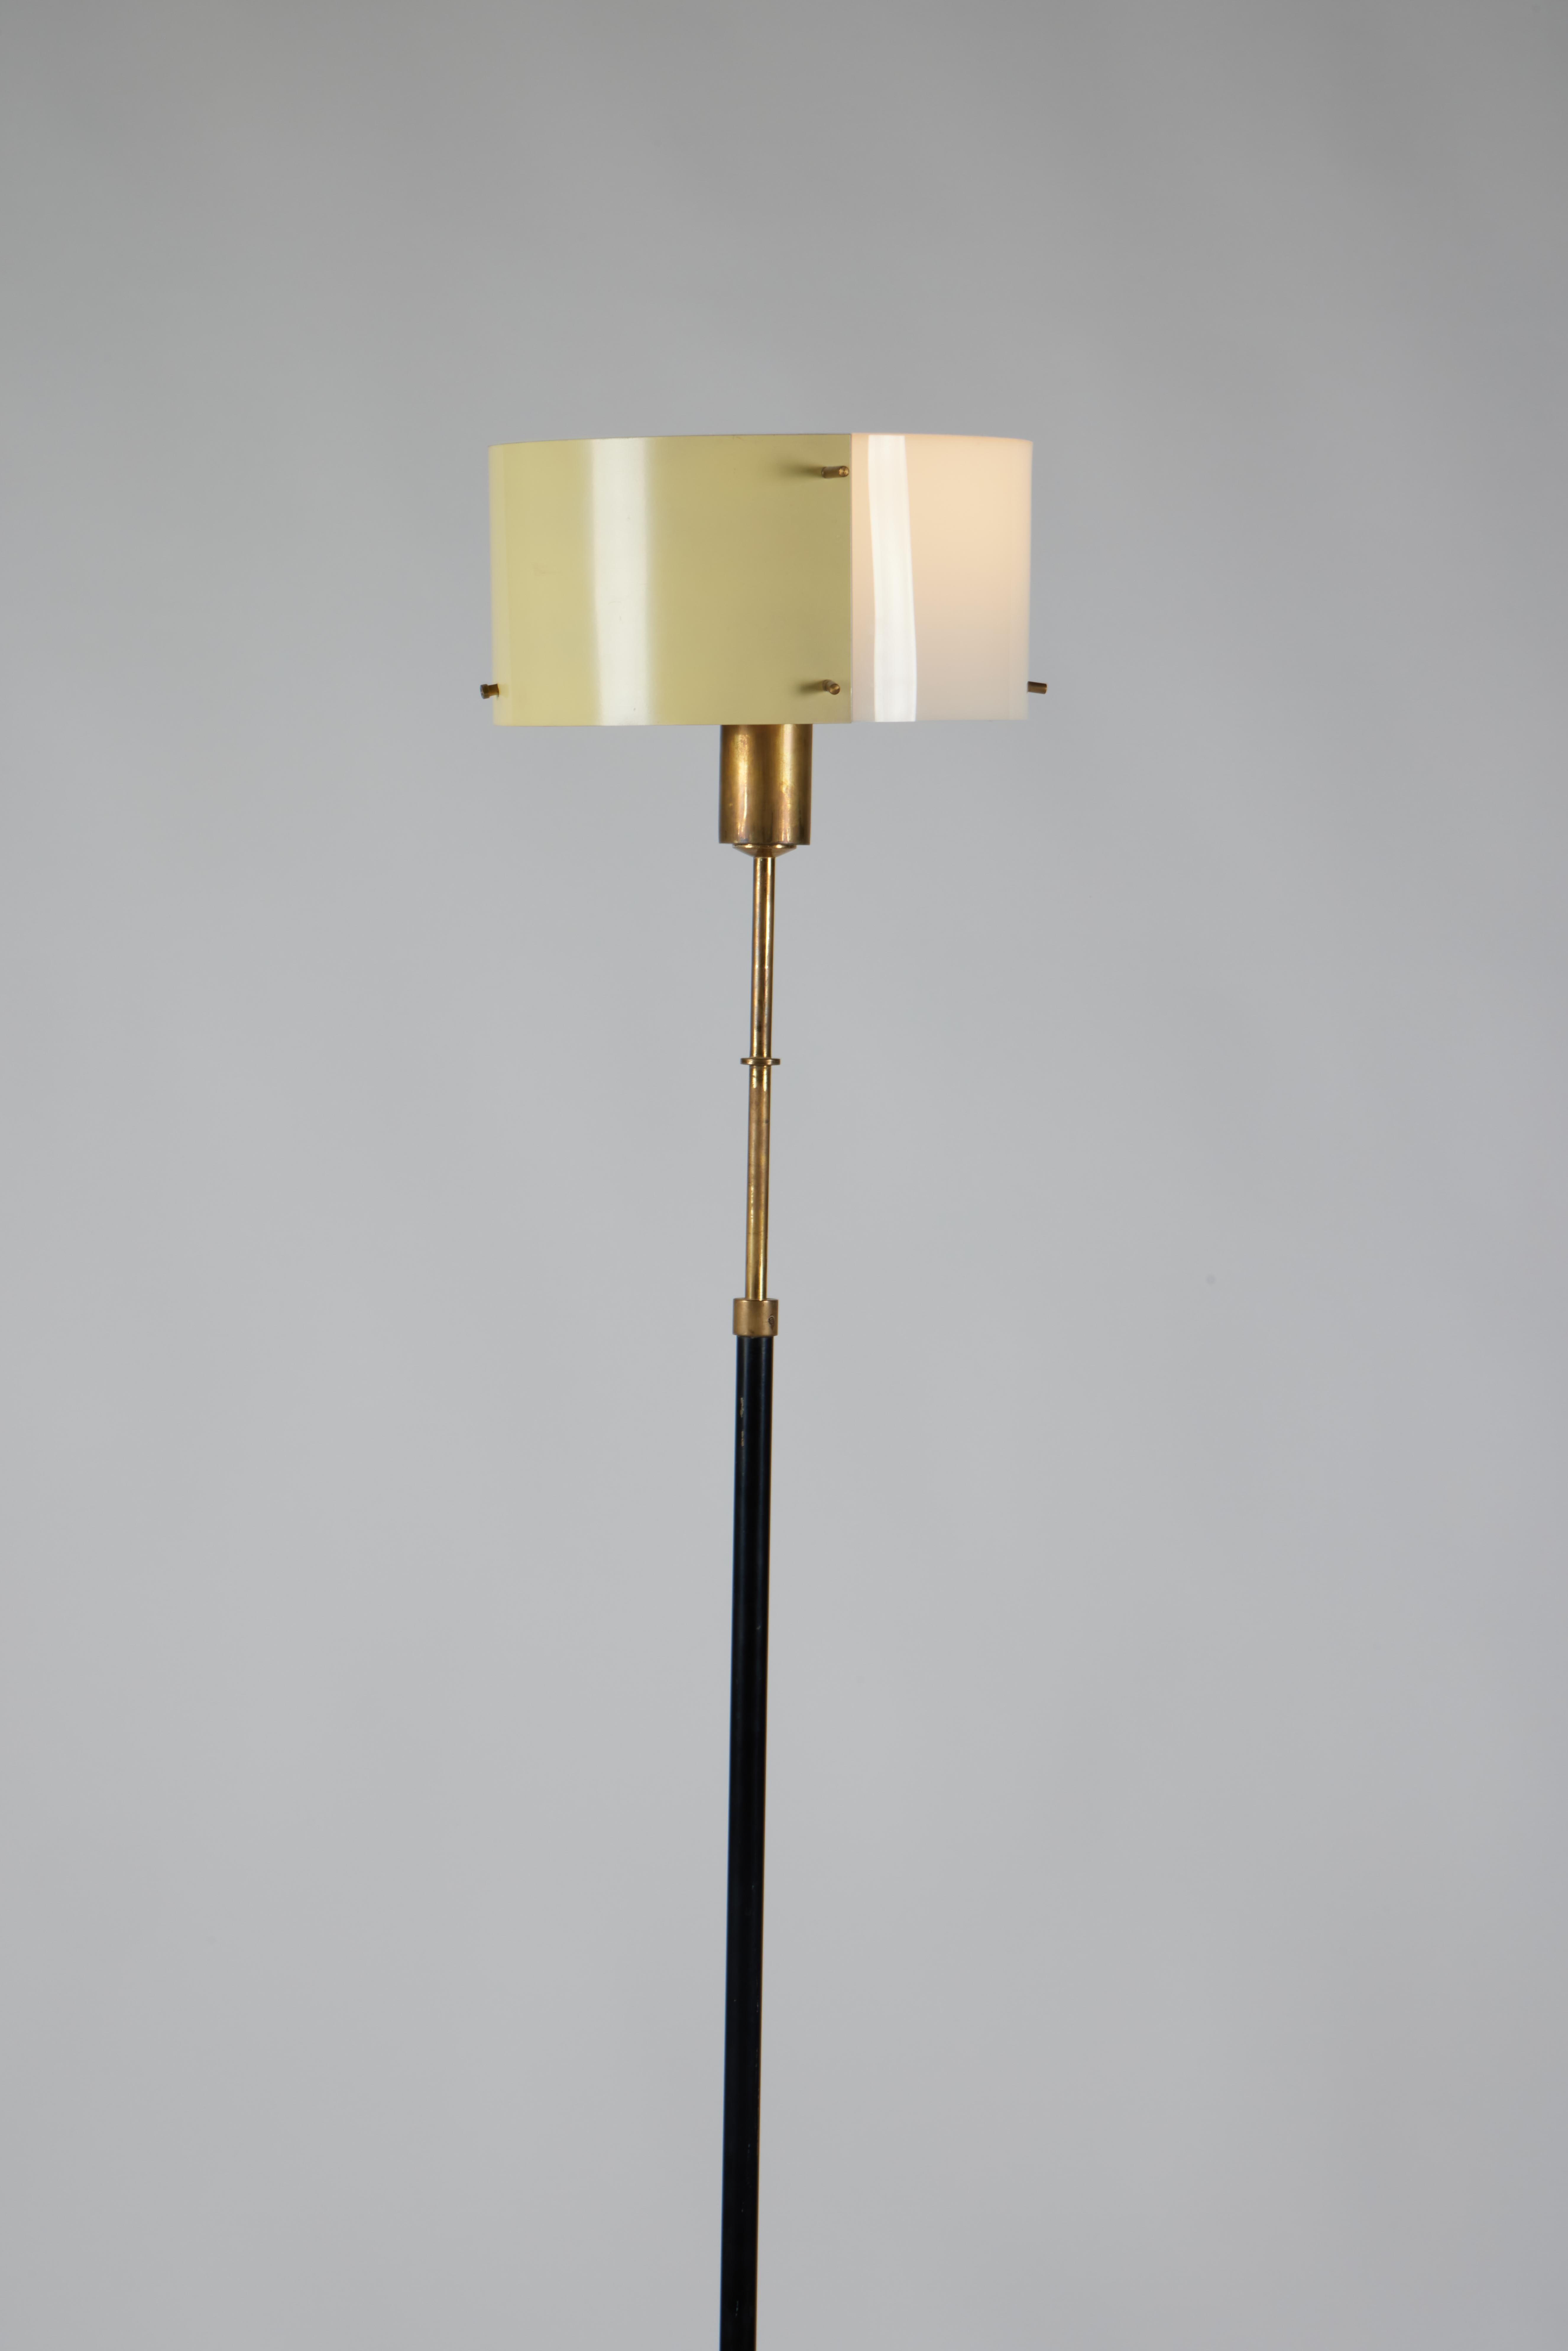 Mid-Century Modern Italian Mid-Century, Modern Floor Lamp with Adjustable Height by Stilnovo, 1950s For Sale